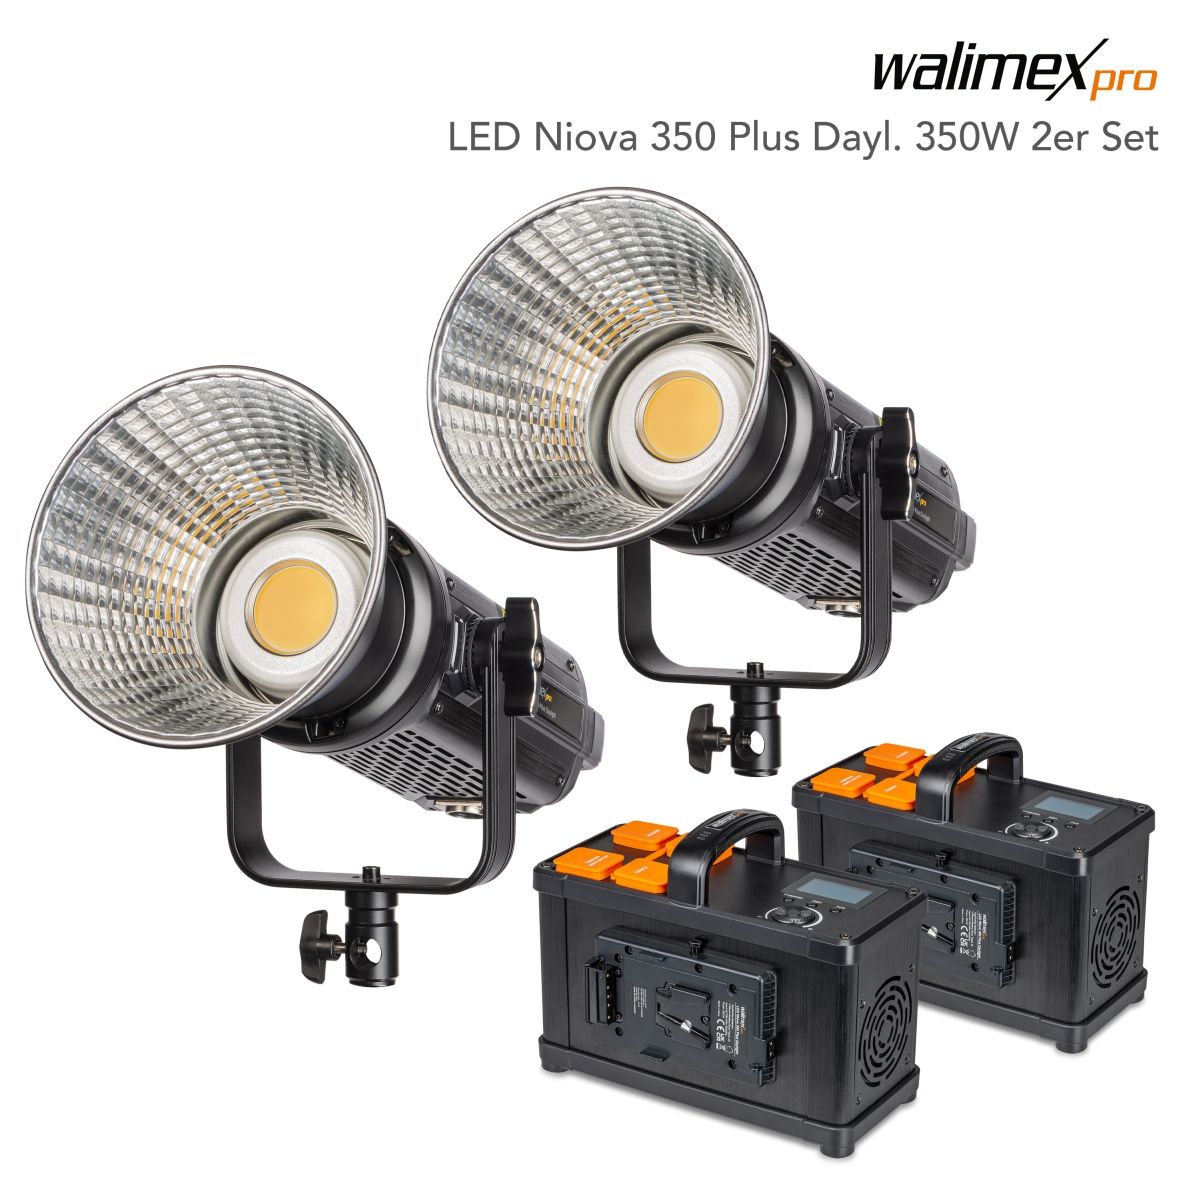 Walimex pro LED Niova 350 Plus Daylight 350W 2er Set